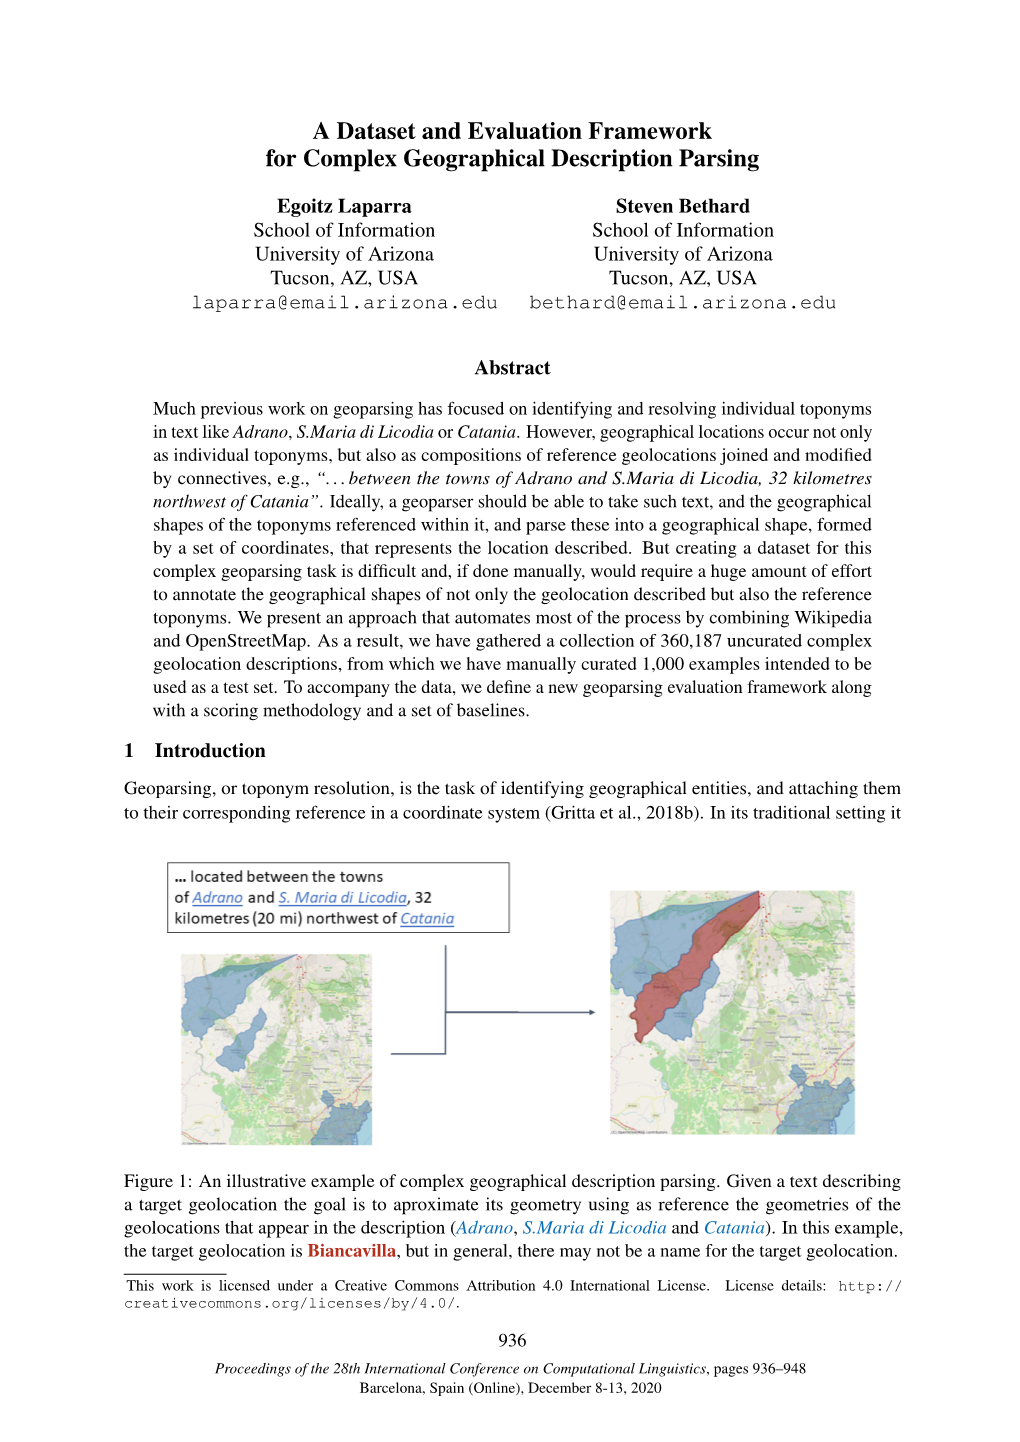 A Dataset and Evaluation Framework for Complex Geographical Description Parsing